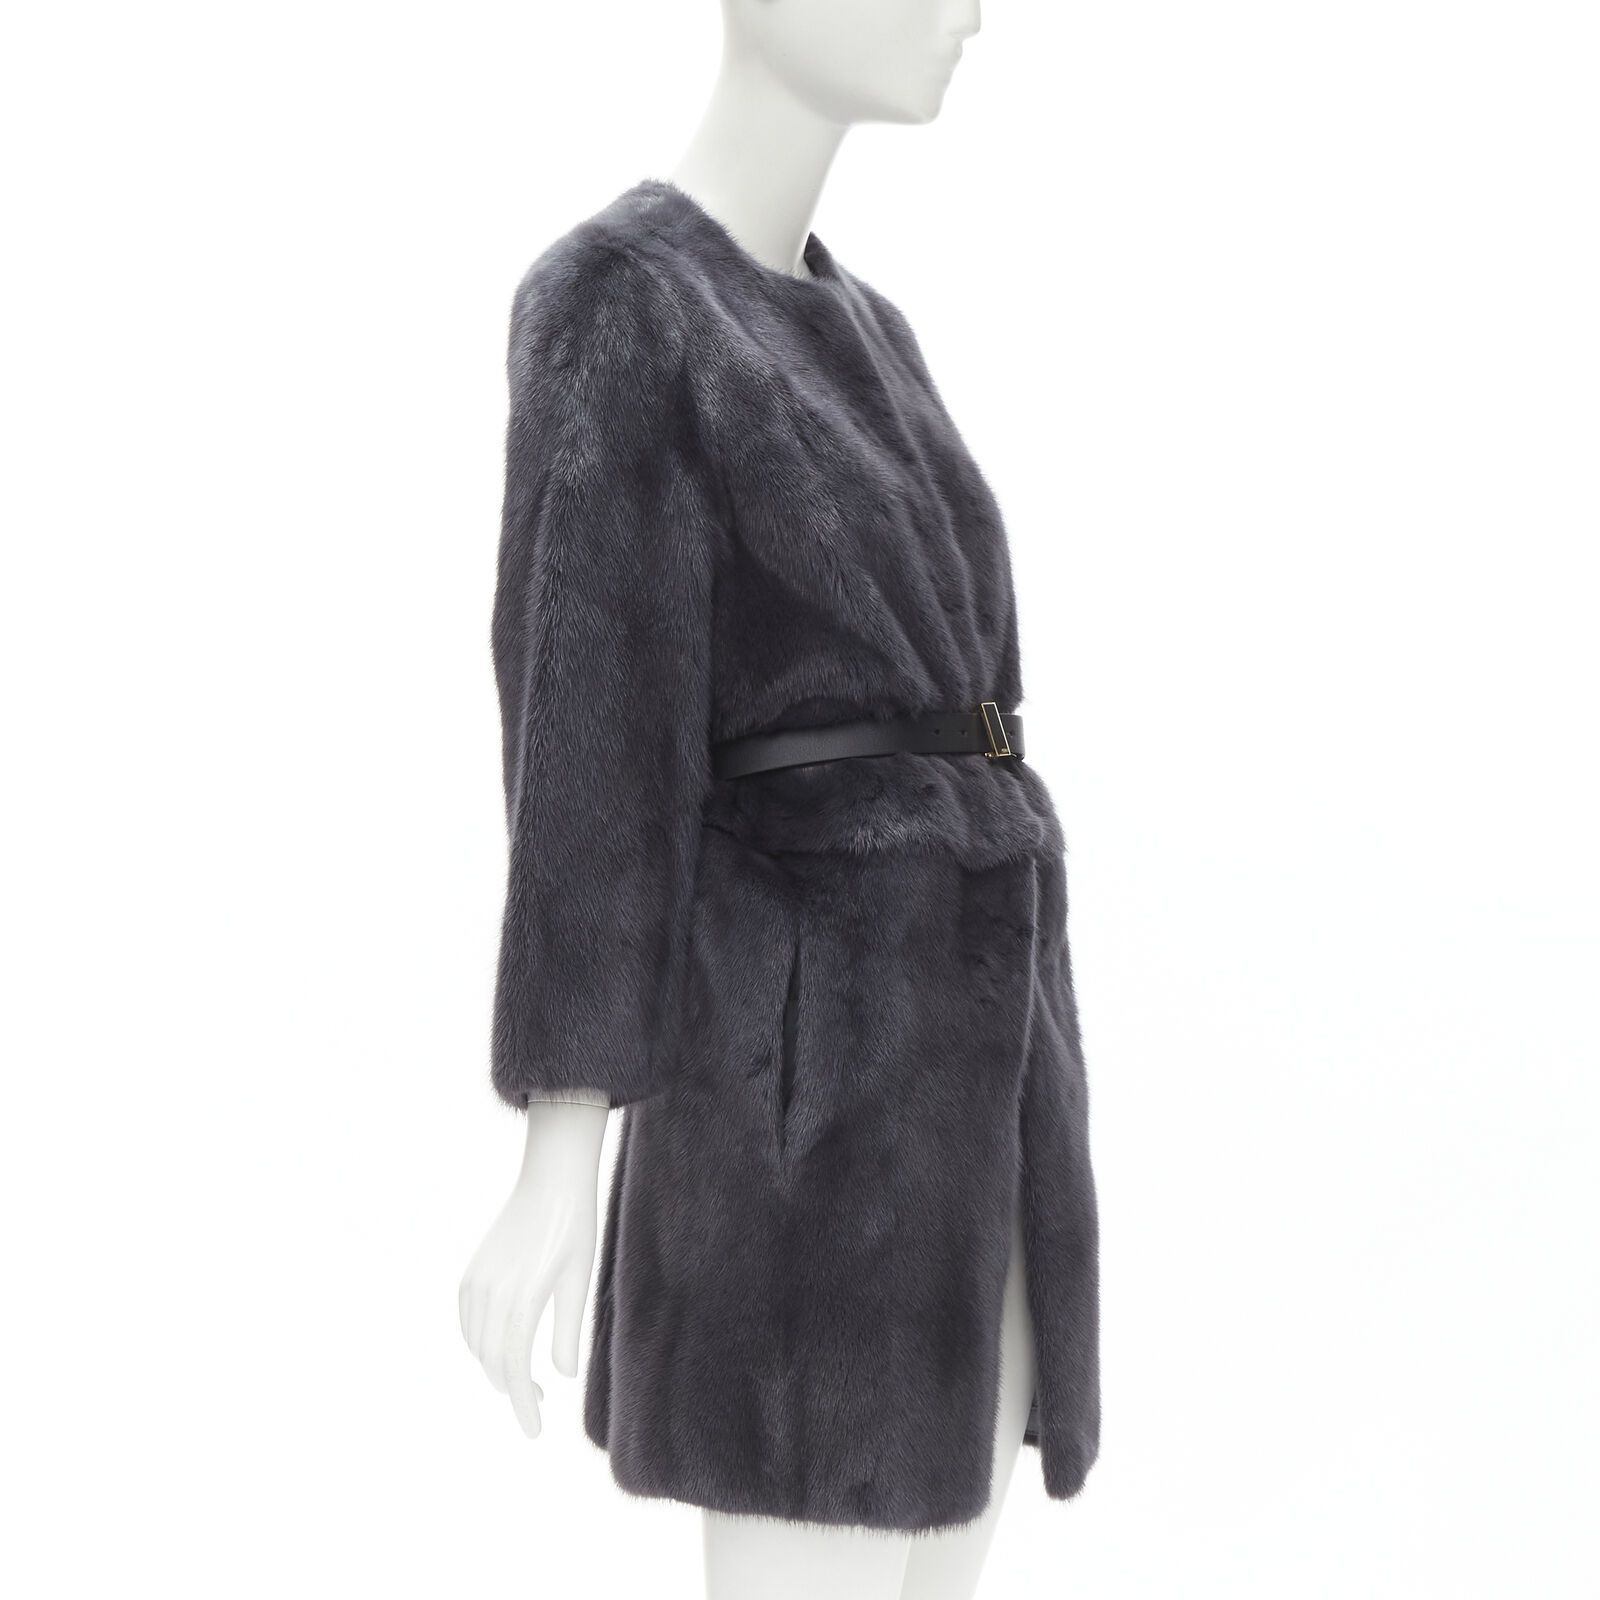 Fendi FENDI grey black fur leather 4-way reversible zip belted coat jacket IT38 Size XS / US 0-2 / IT 36-38 - 3 Thumbnail